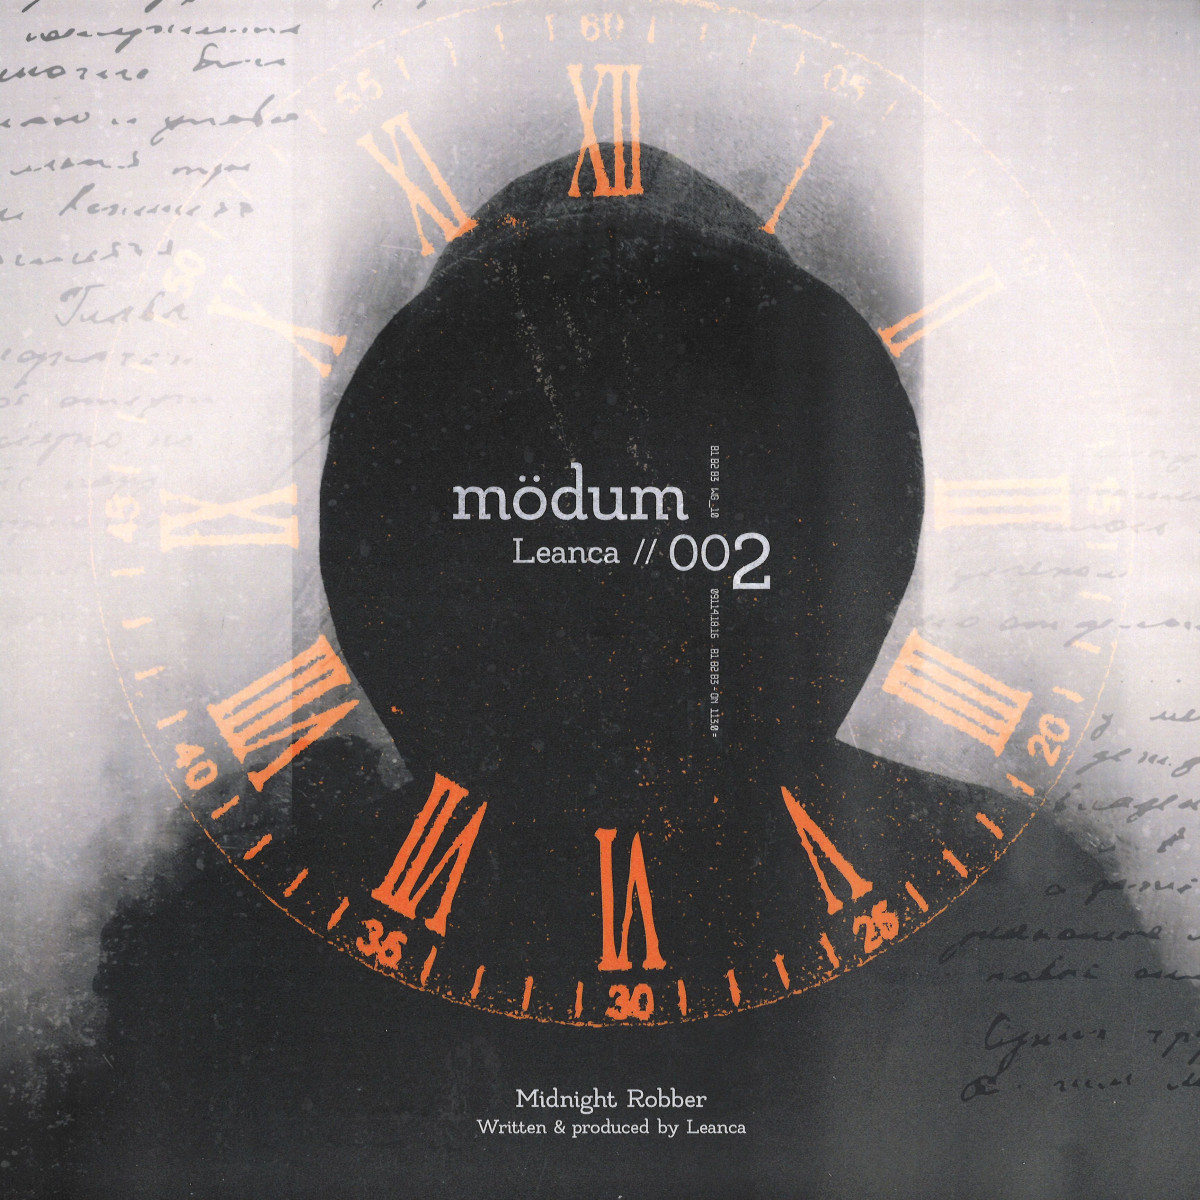 Leanca - Midnight Robber / Mödum MDM002 - Vinyl